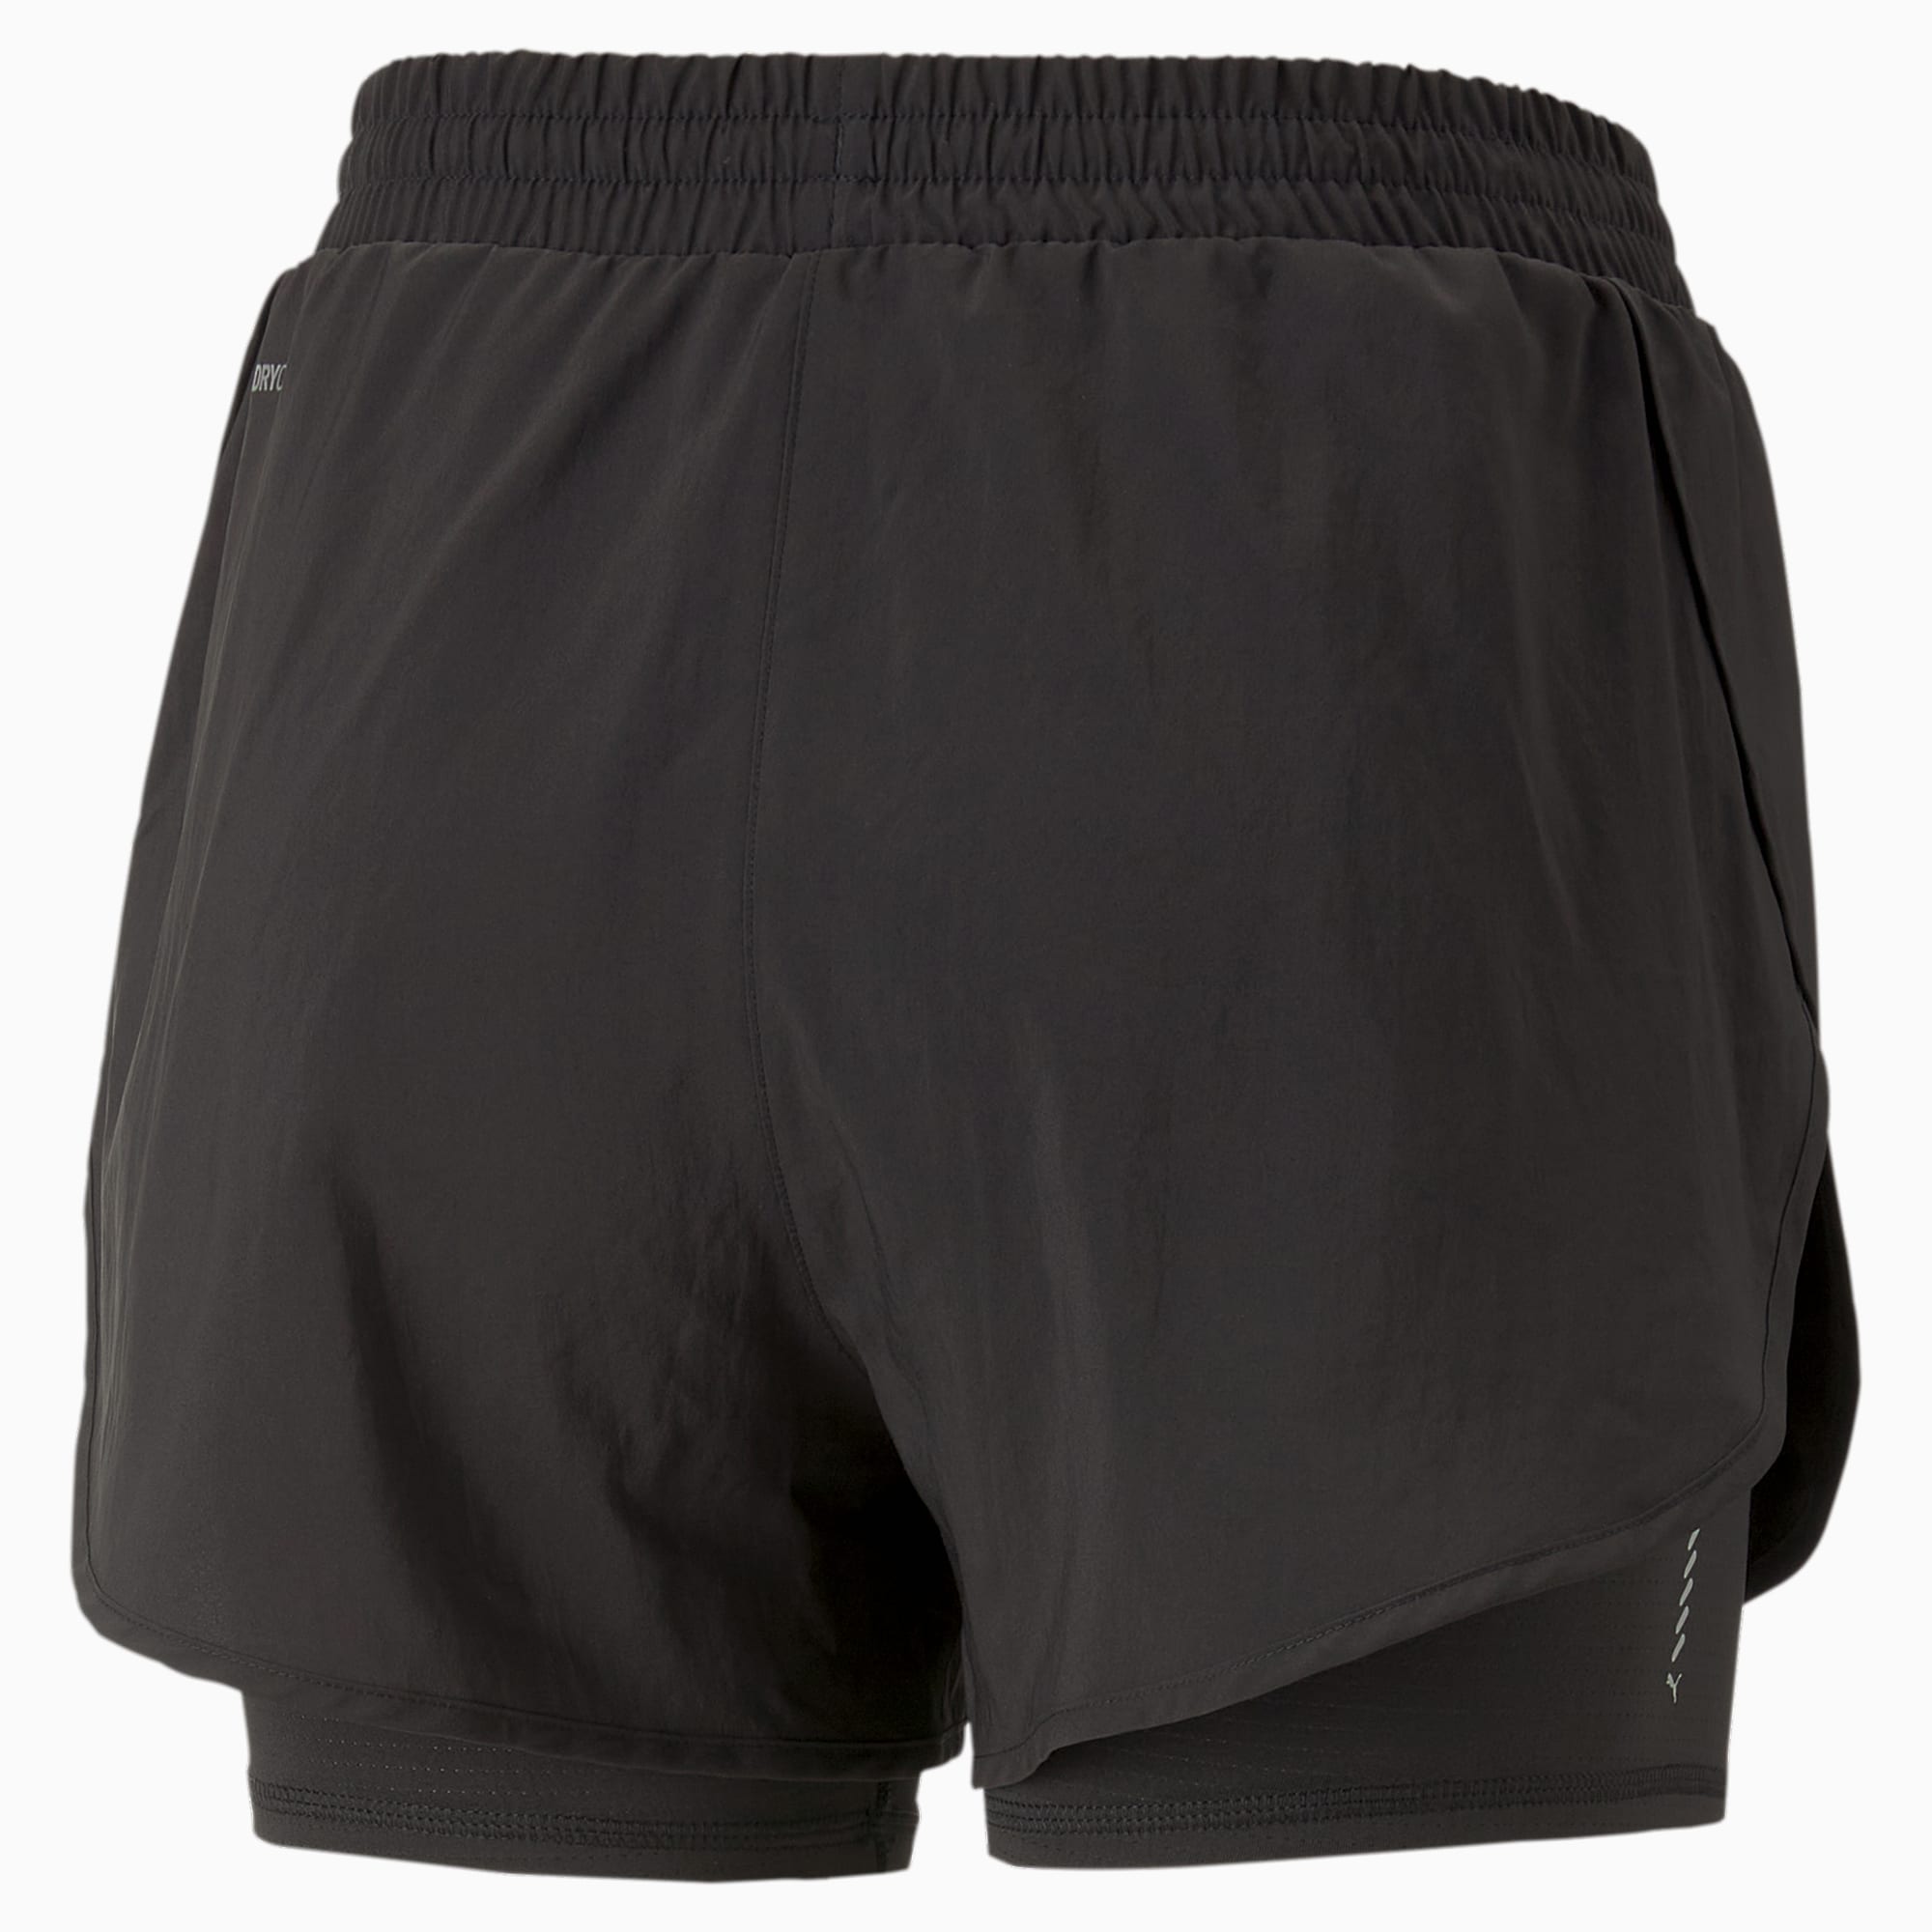 VA Di Ii - Athletic Shorts for Women